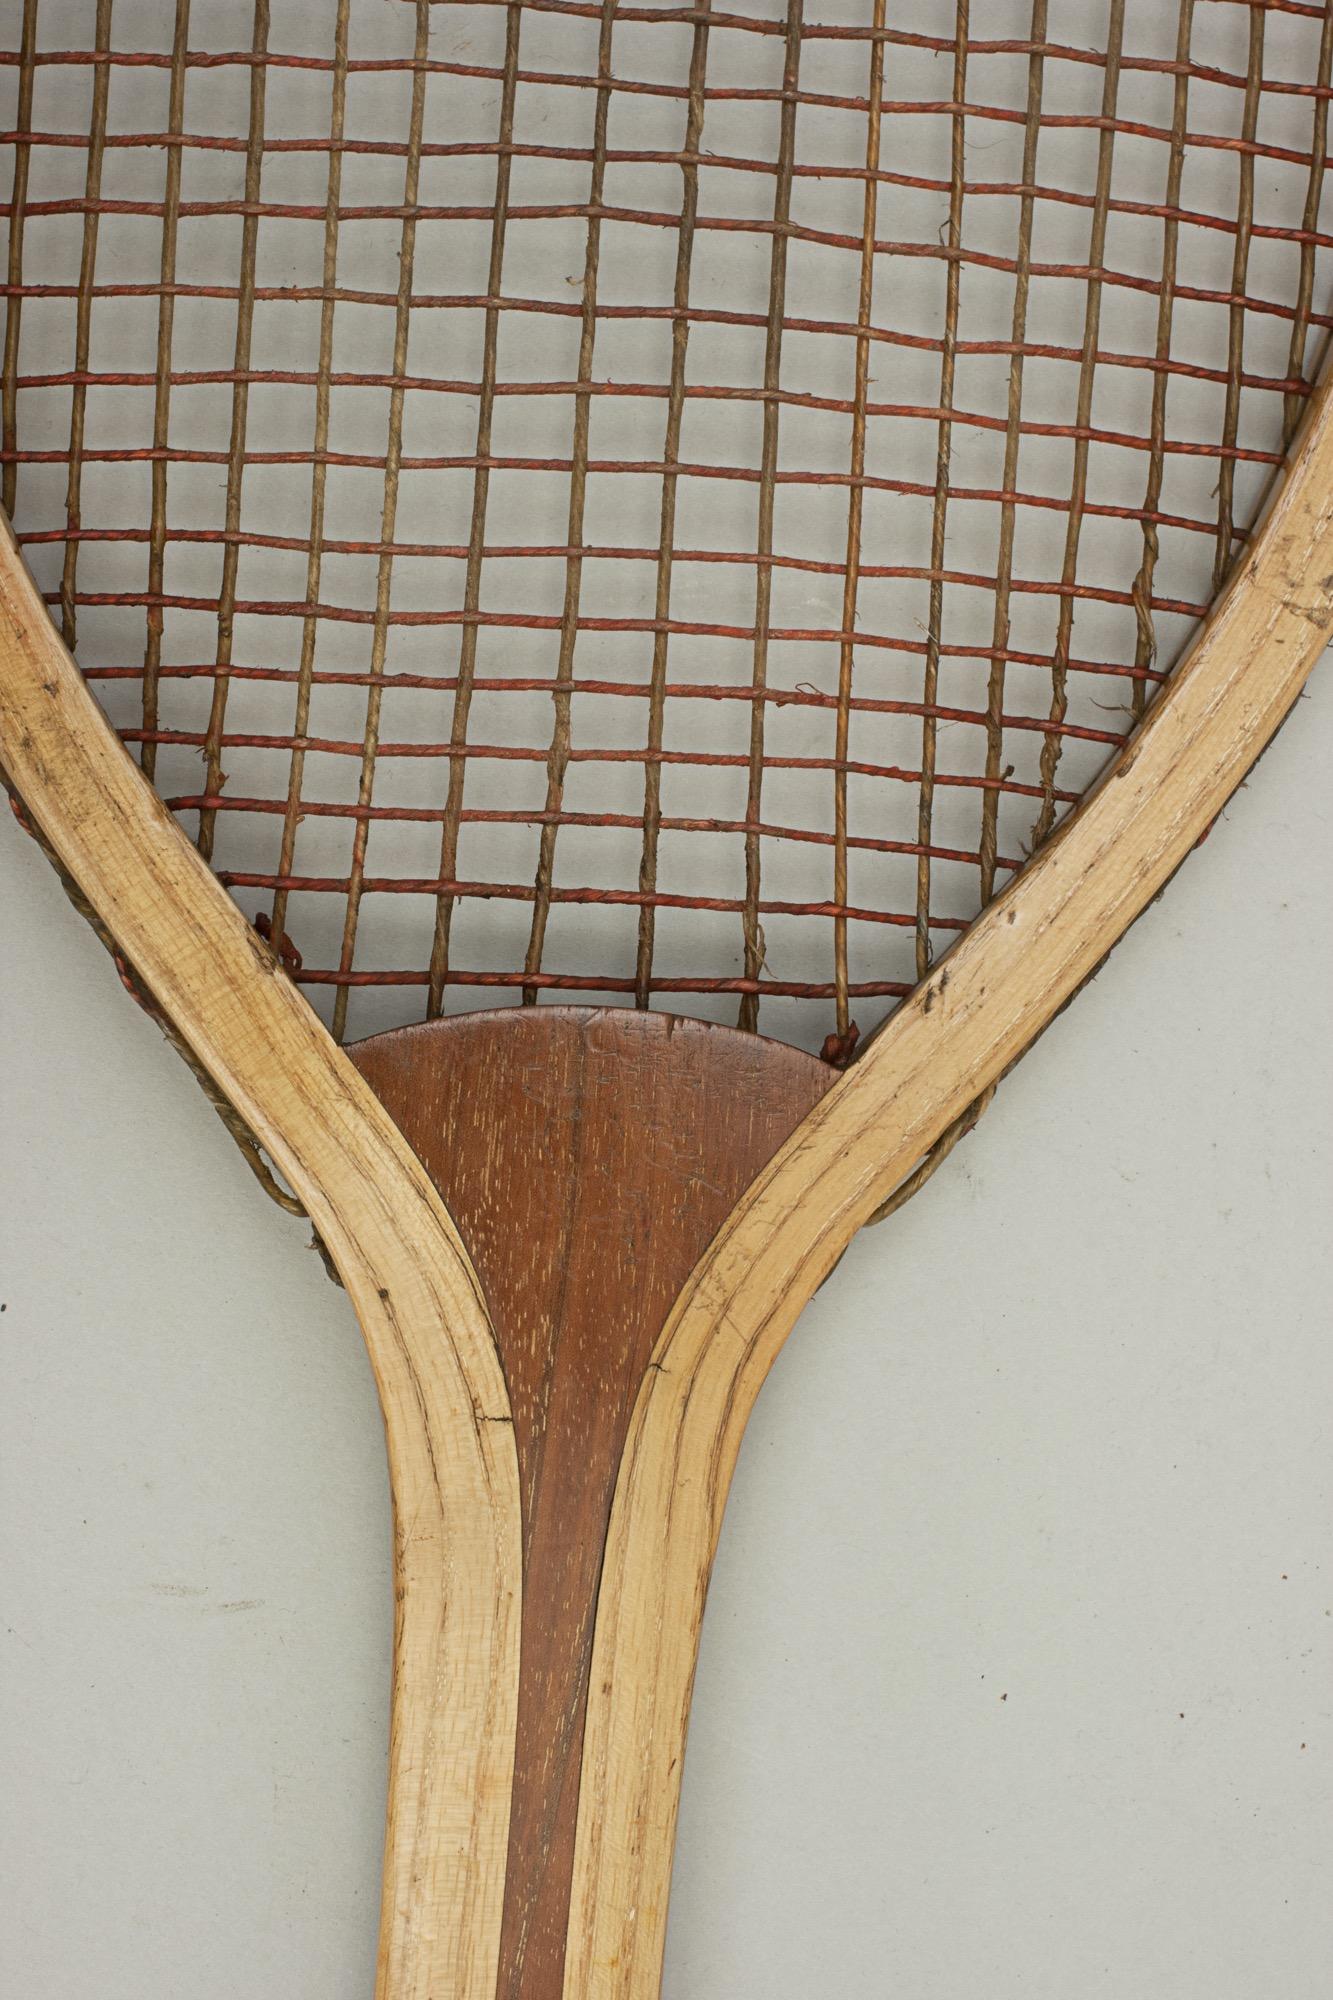 Wood Antique Bussey Design Cork Grip Lawn Tennis Racket